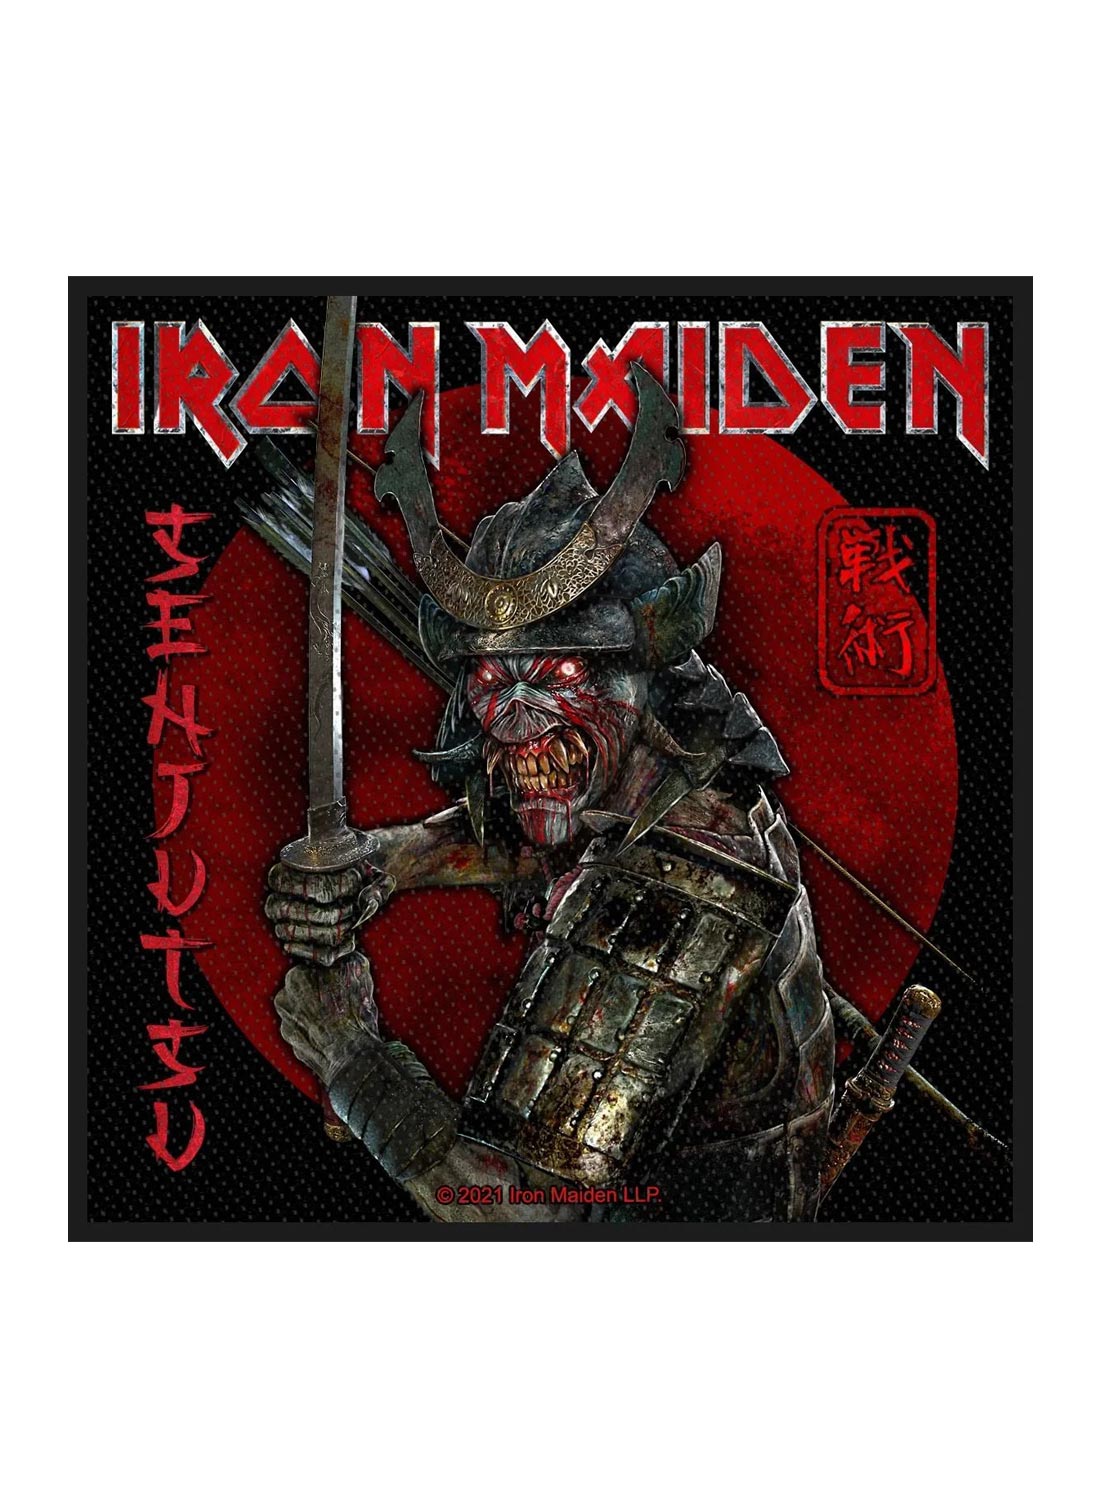 Iron Maiden Senjutsu Patch